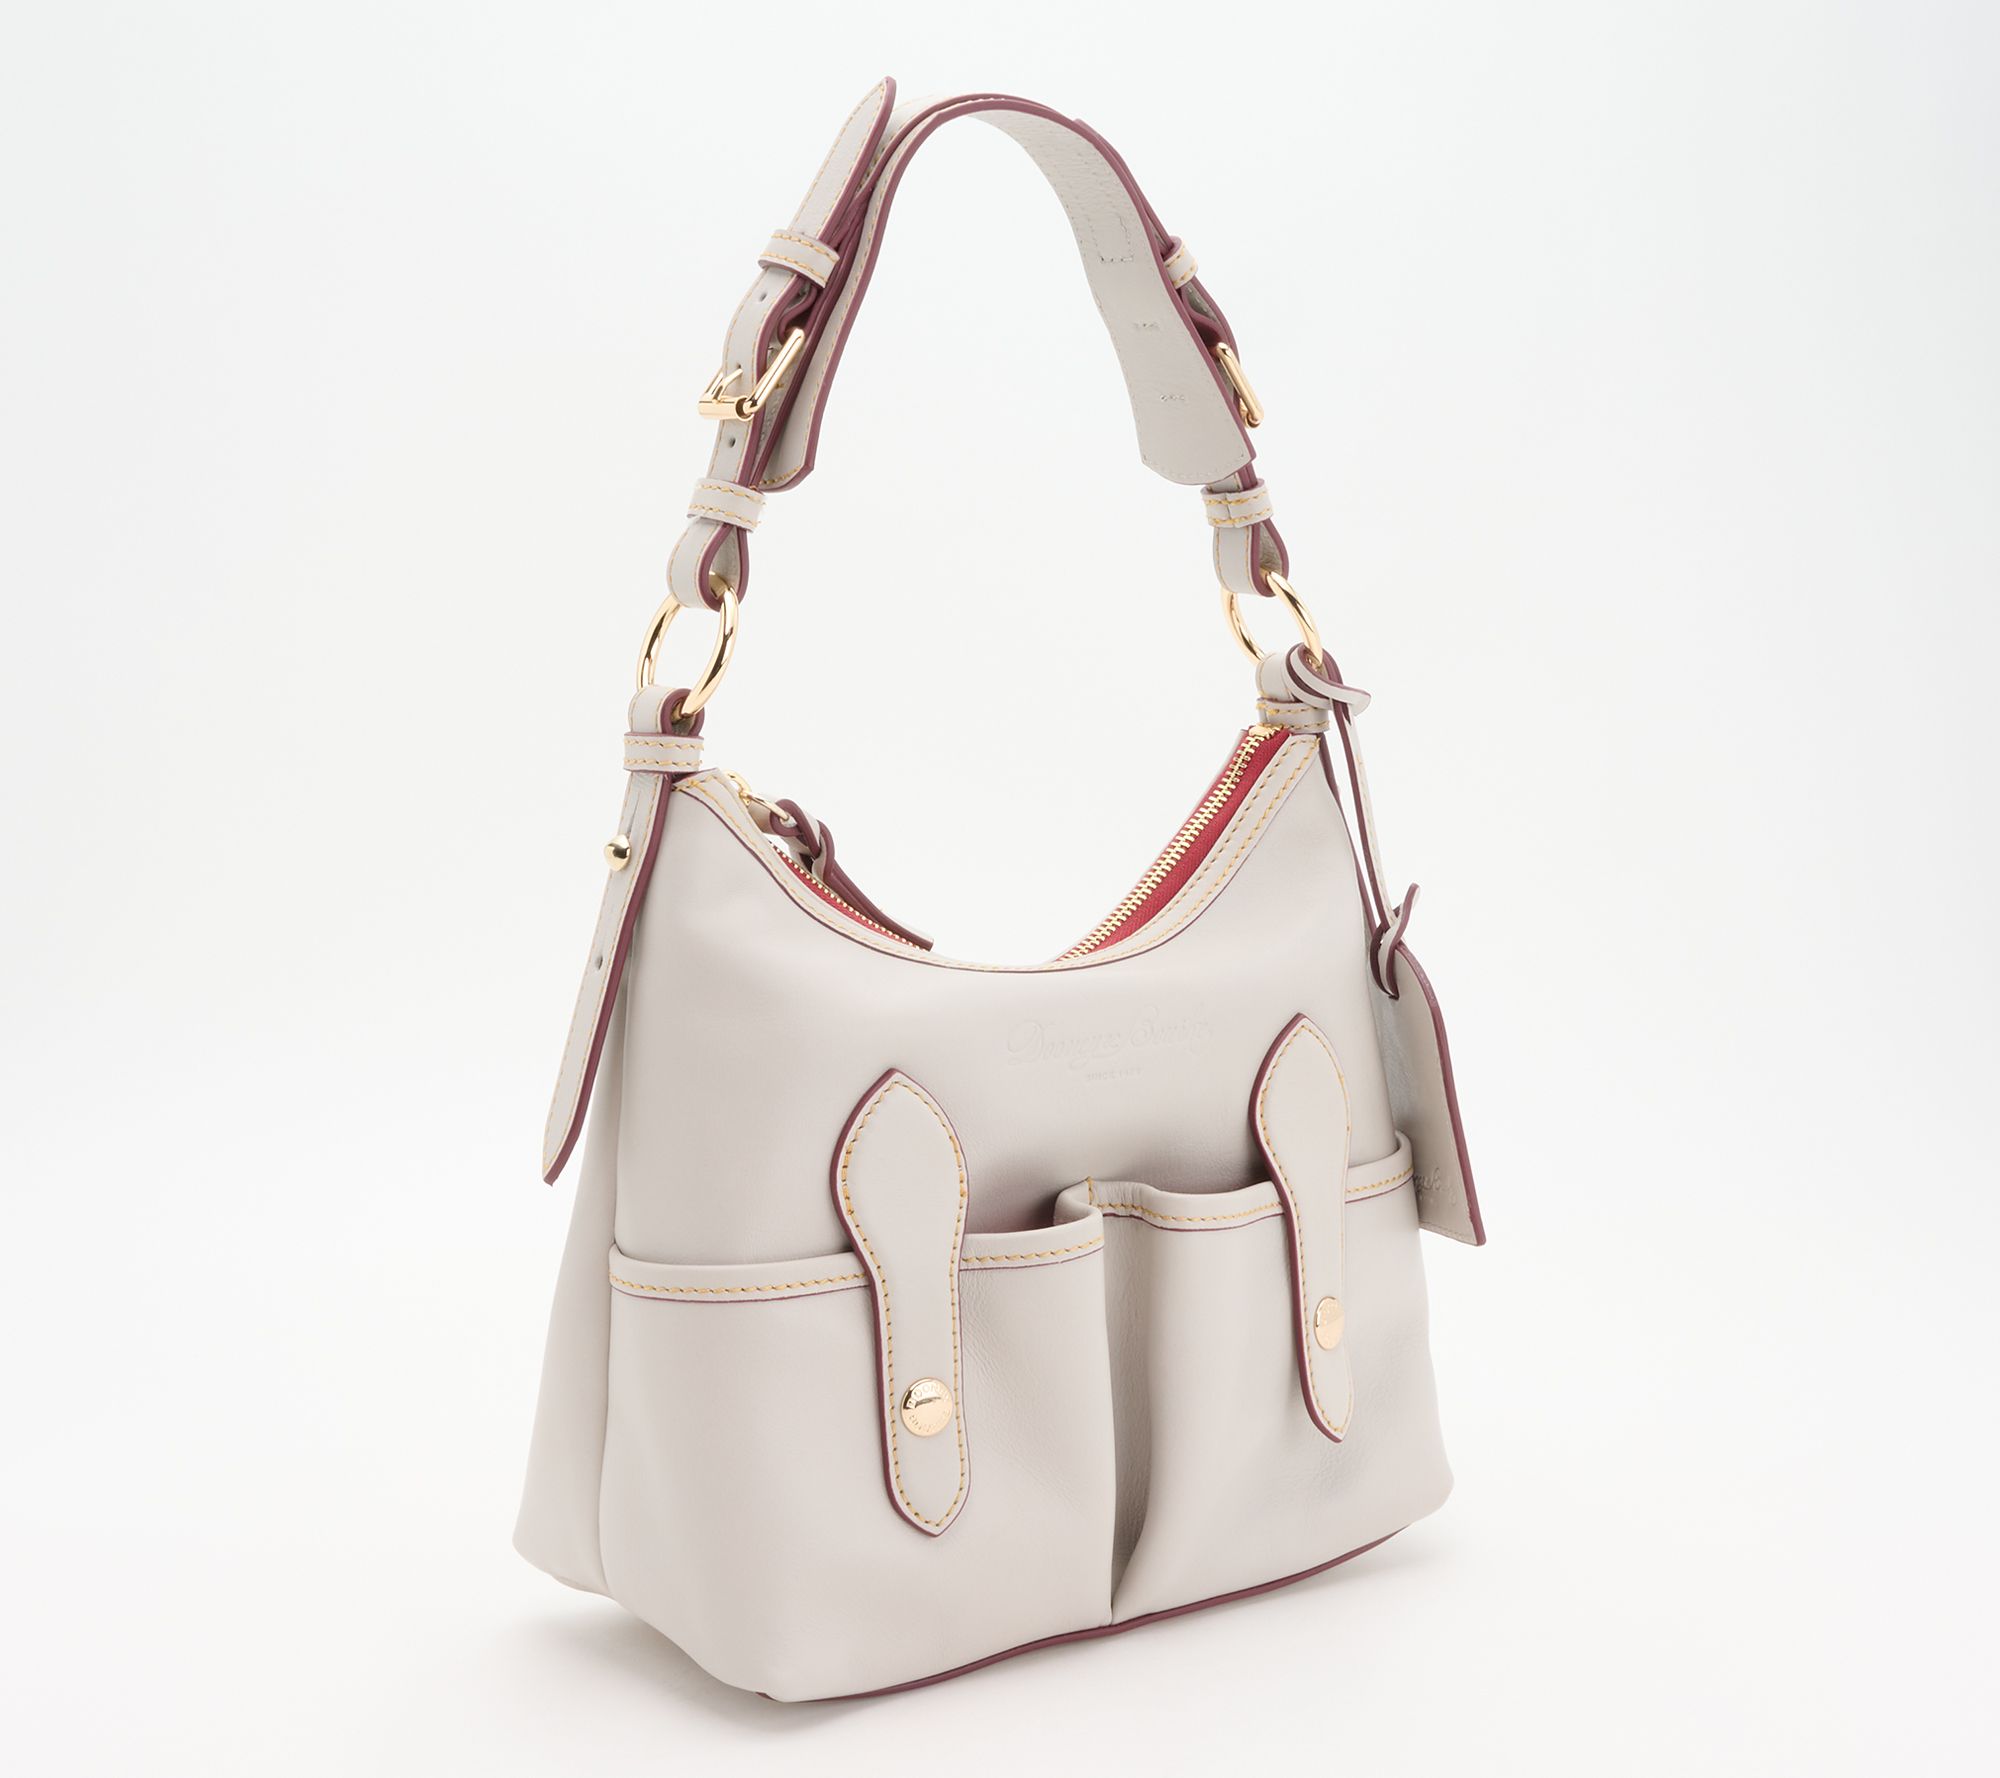 Dooney & Bourke Handbag, Florentine Small Lucy Shoulder Bag